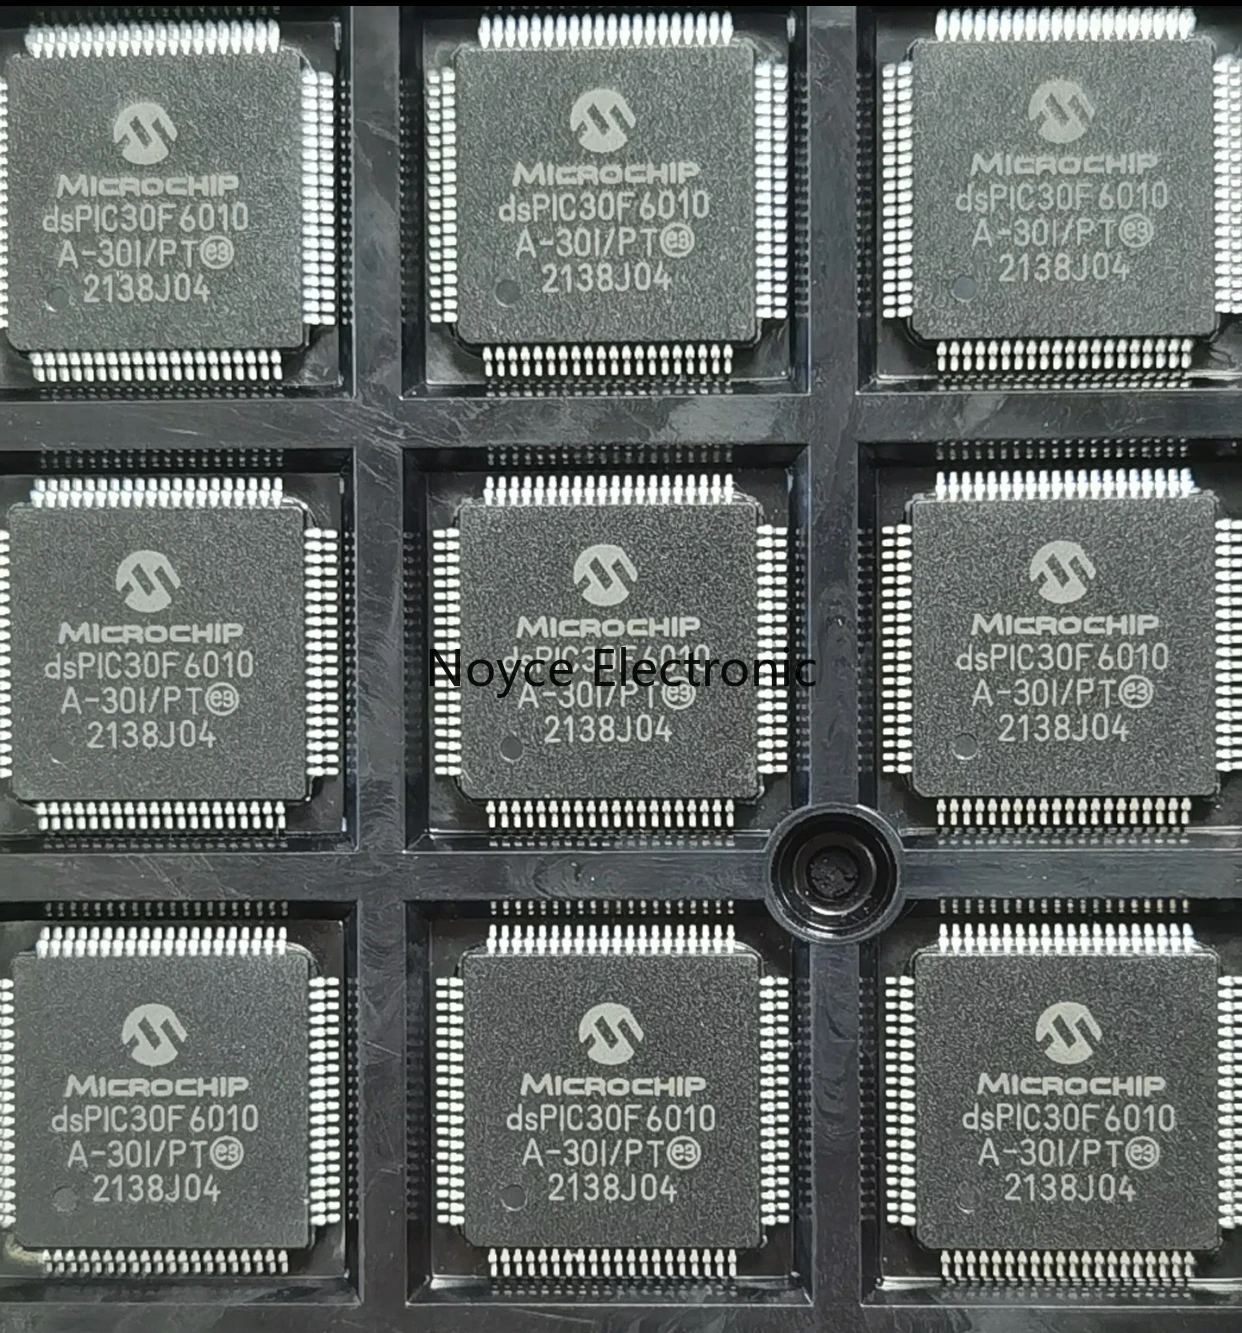 DSPIC30F6010A-30I/PT package QFP80 digital signal processor chip IC brand new original /1pcs